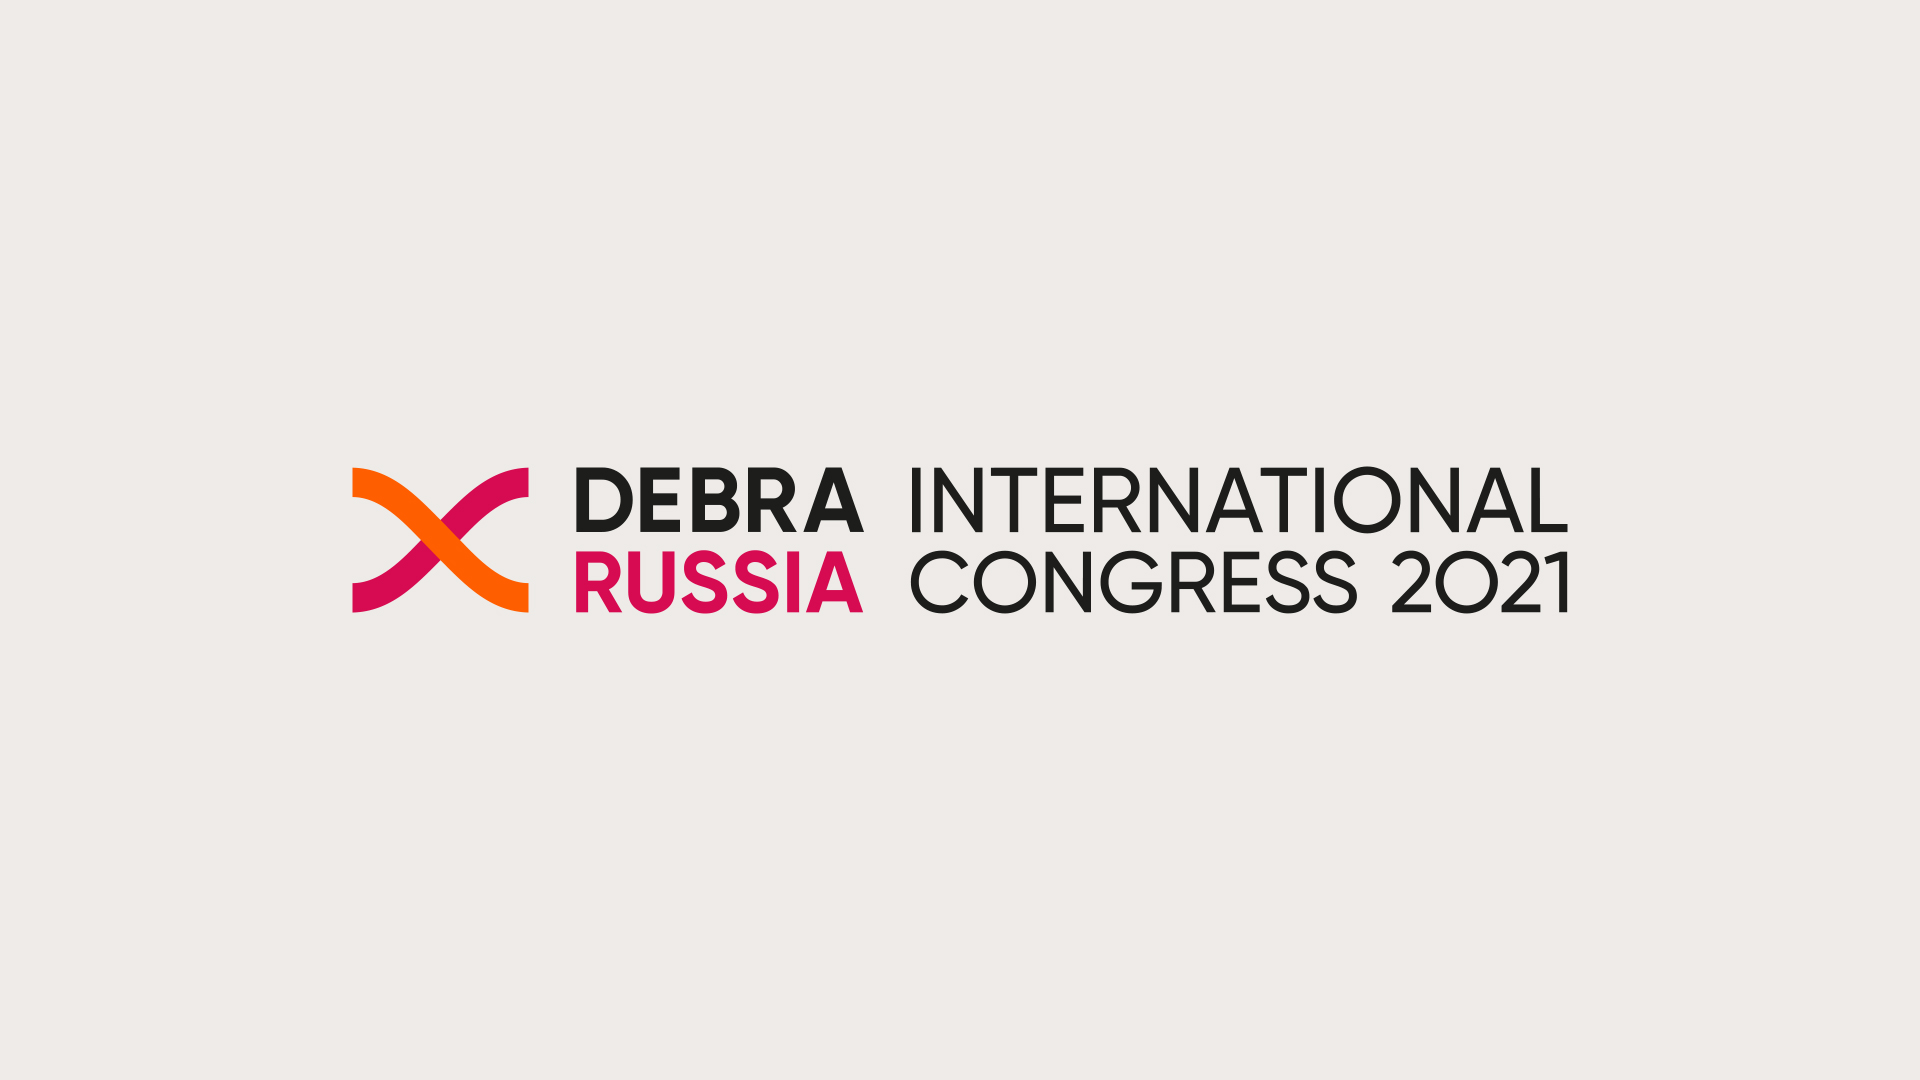 DEBRA Russia International Congress 2021